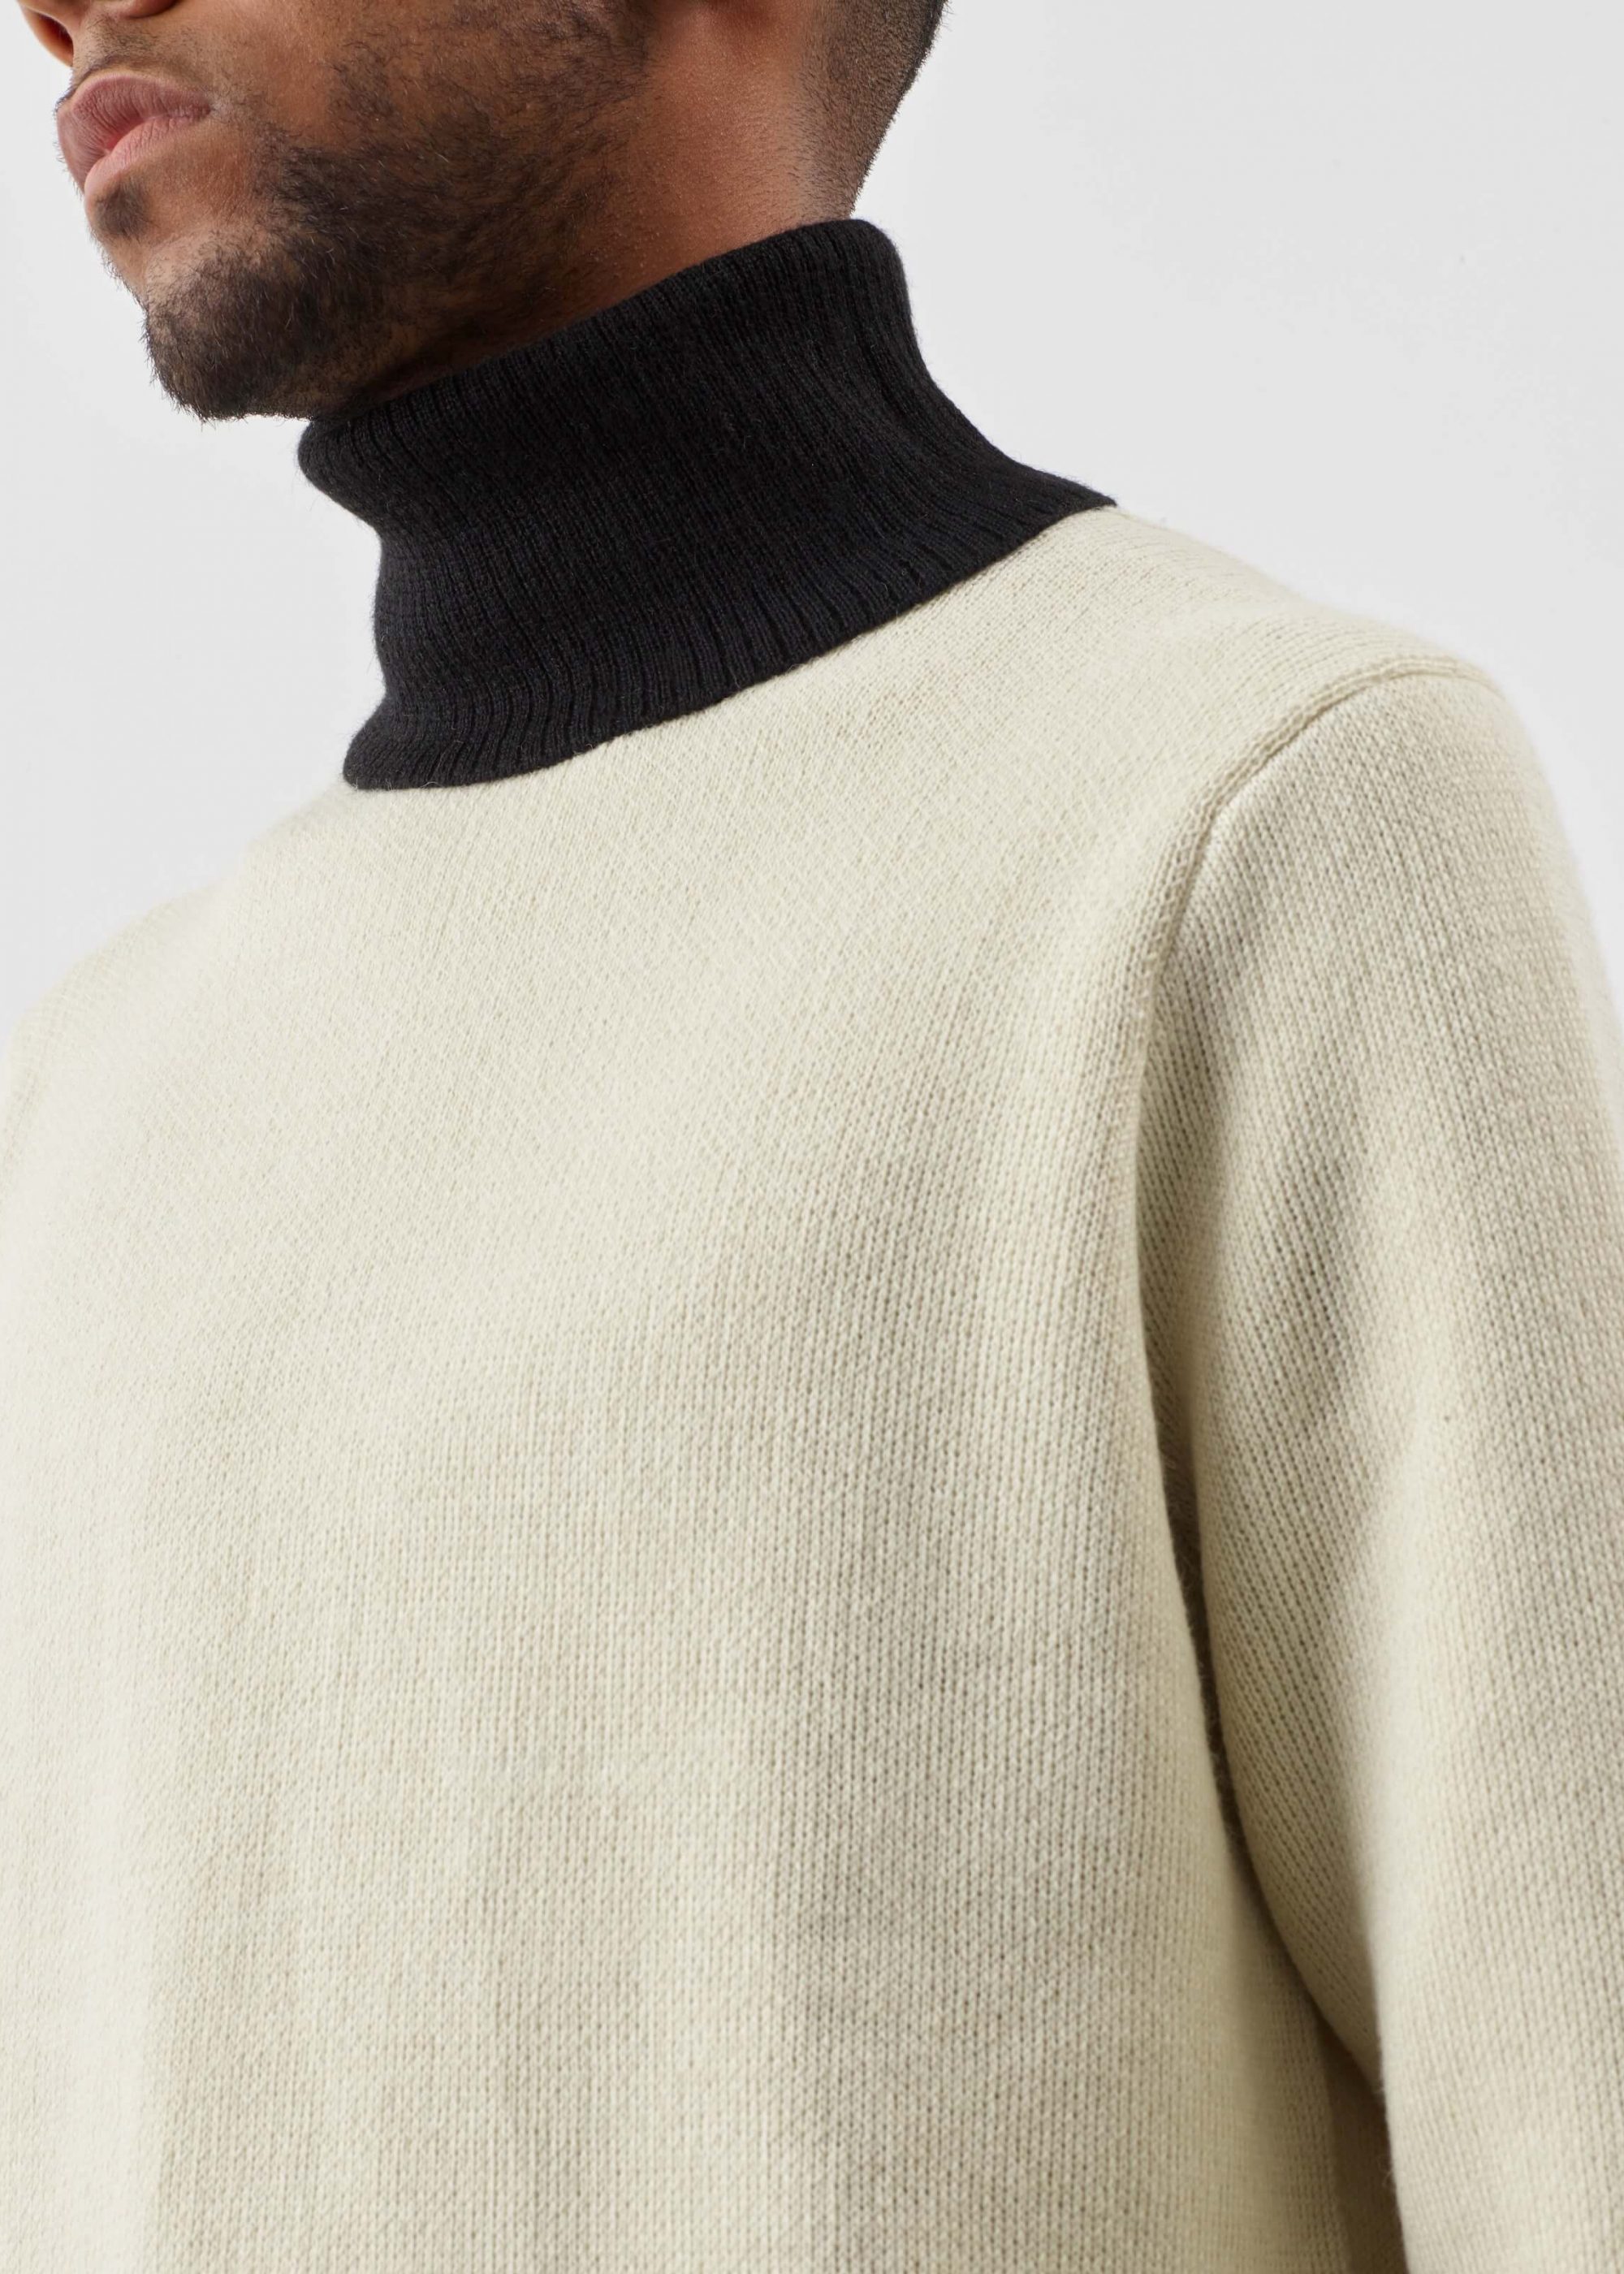 Product image for »Atman« Turtleneck Sweater Baby Alpaca | Ecru Black